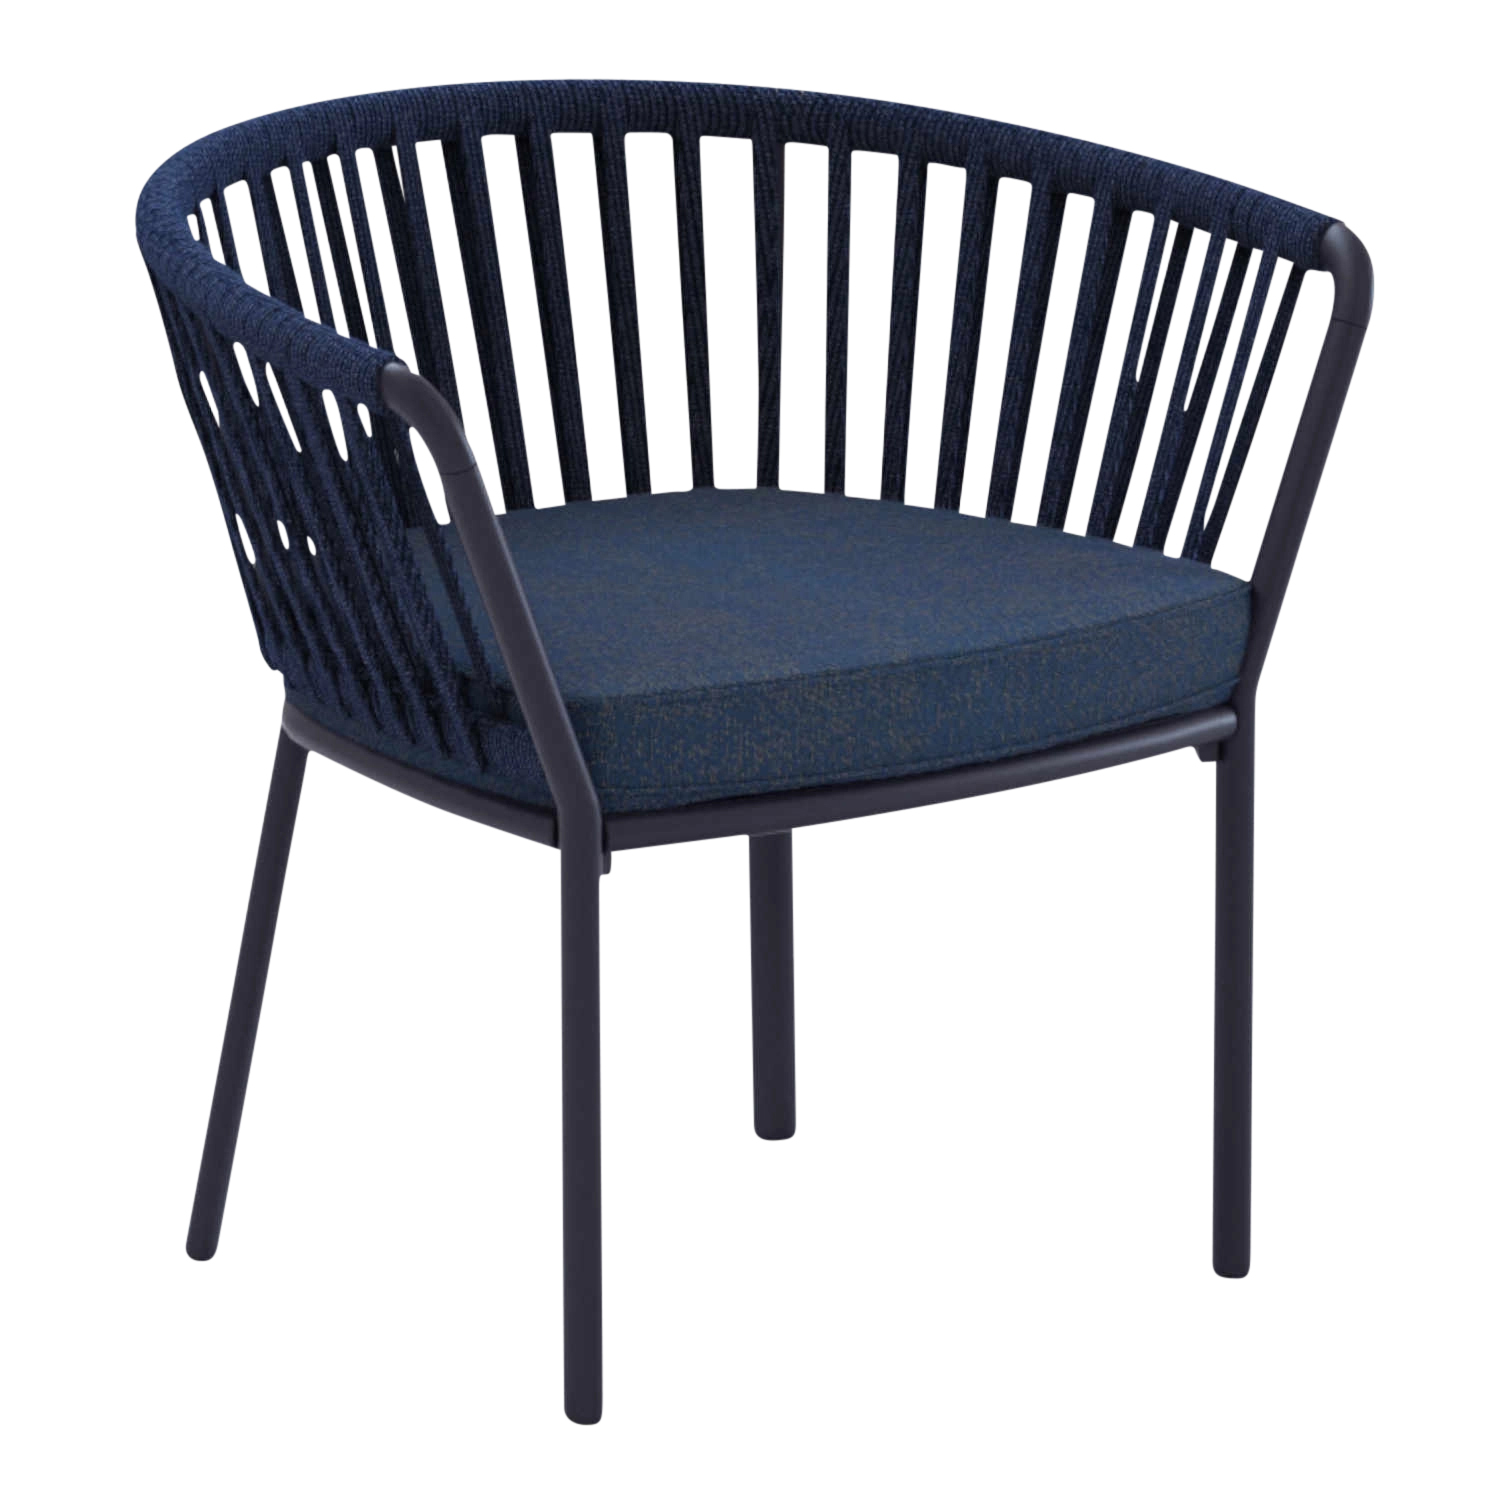 Ria 7605 Sessel, Gestell aluminium lackiert, black (schwarz), Rope c06 sunset (mehrfarbig), Stoff range 1 solids, colorado (rot) von FAST